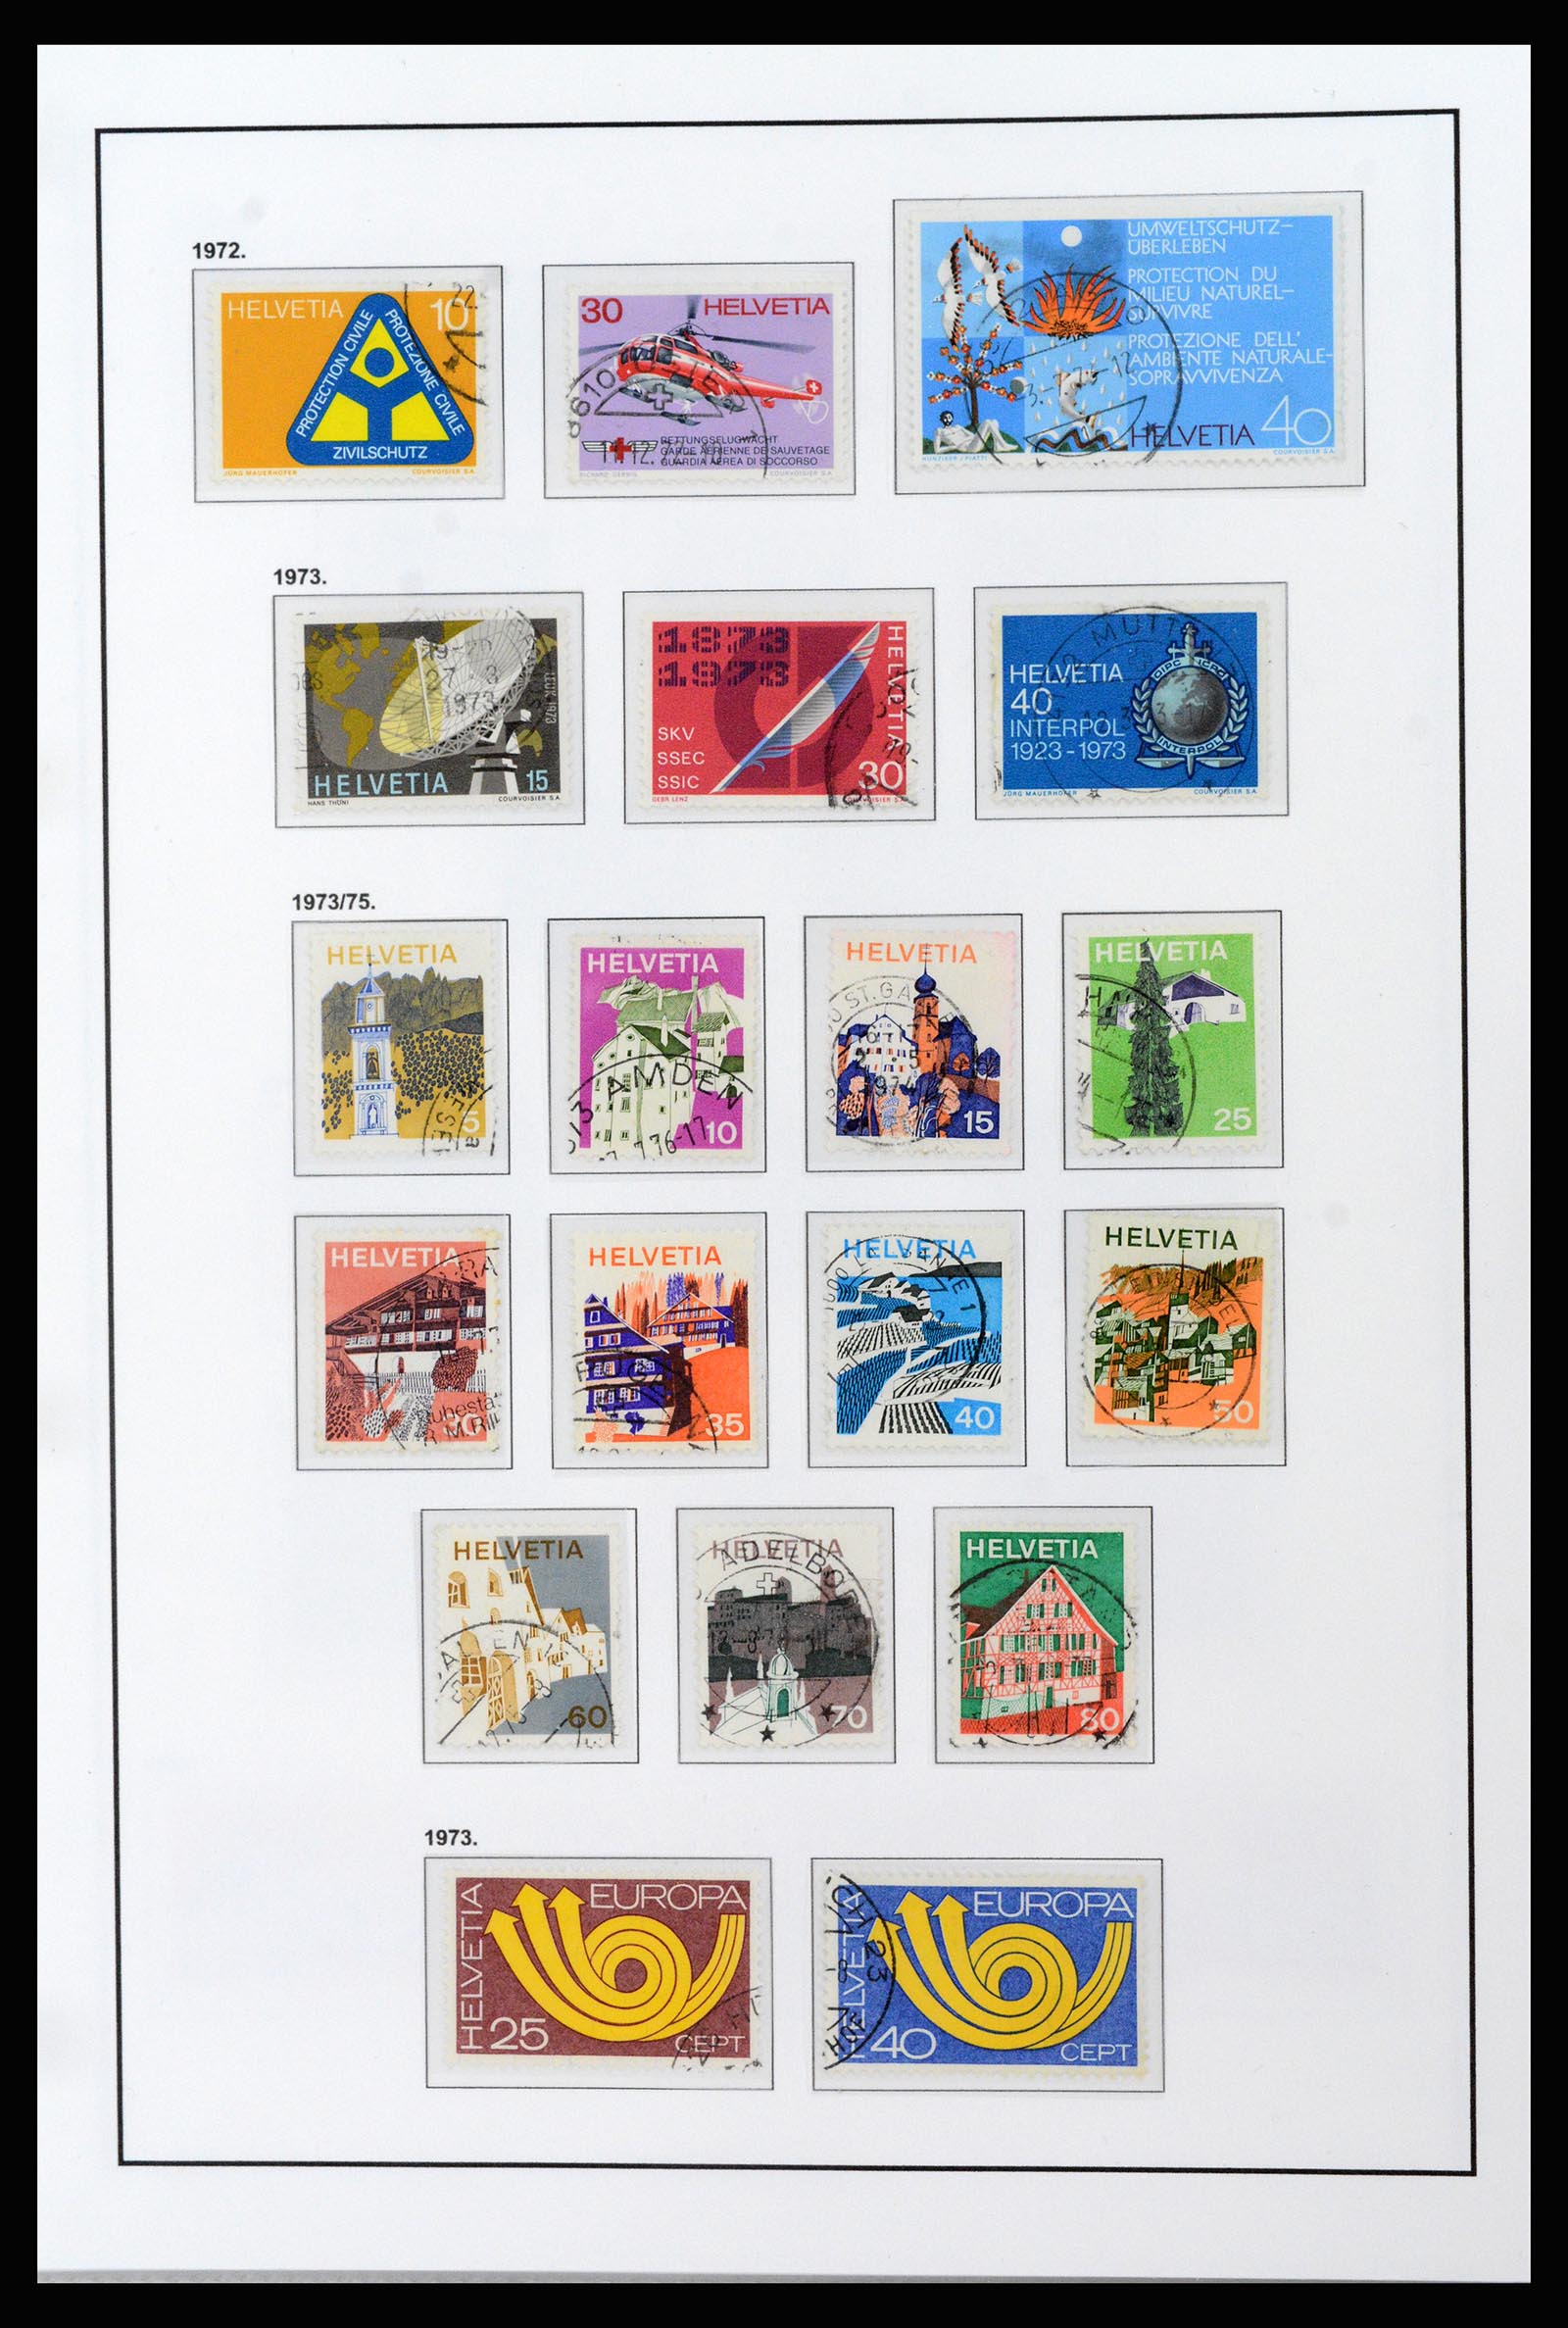 37225 032 - Stamp collection 37225 Switzerland 1854-2020.